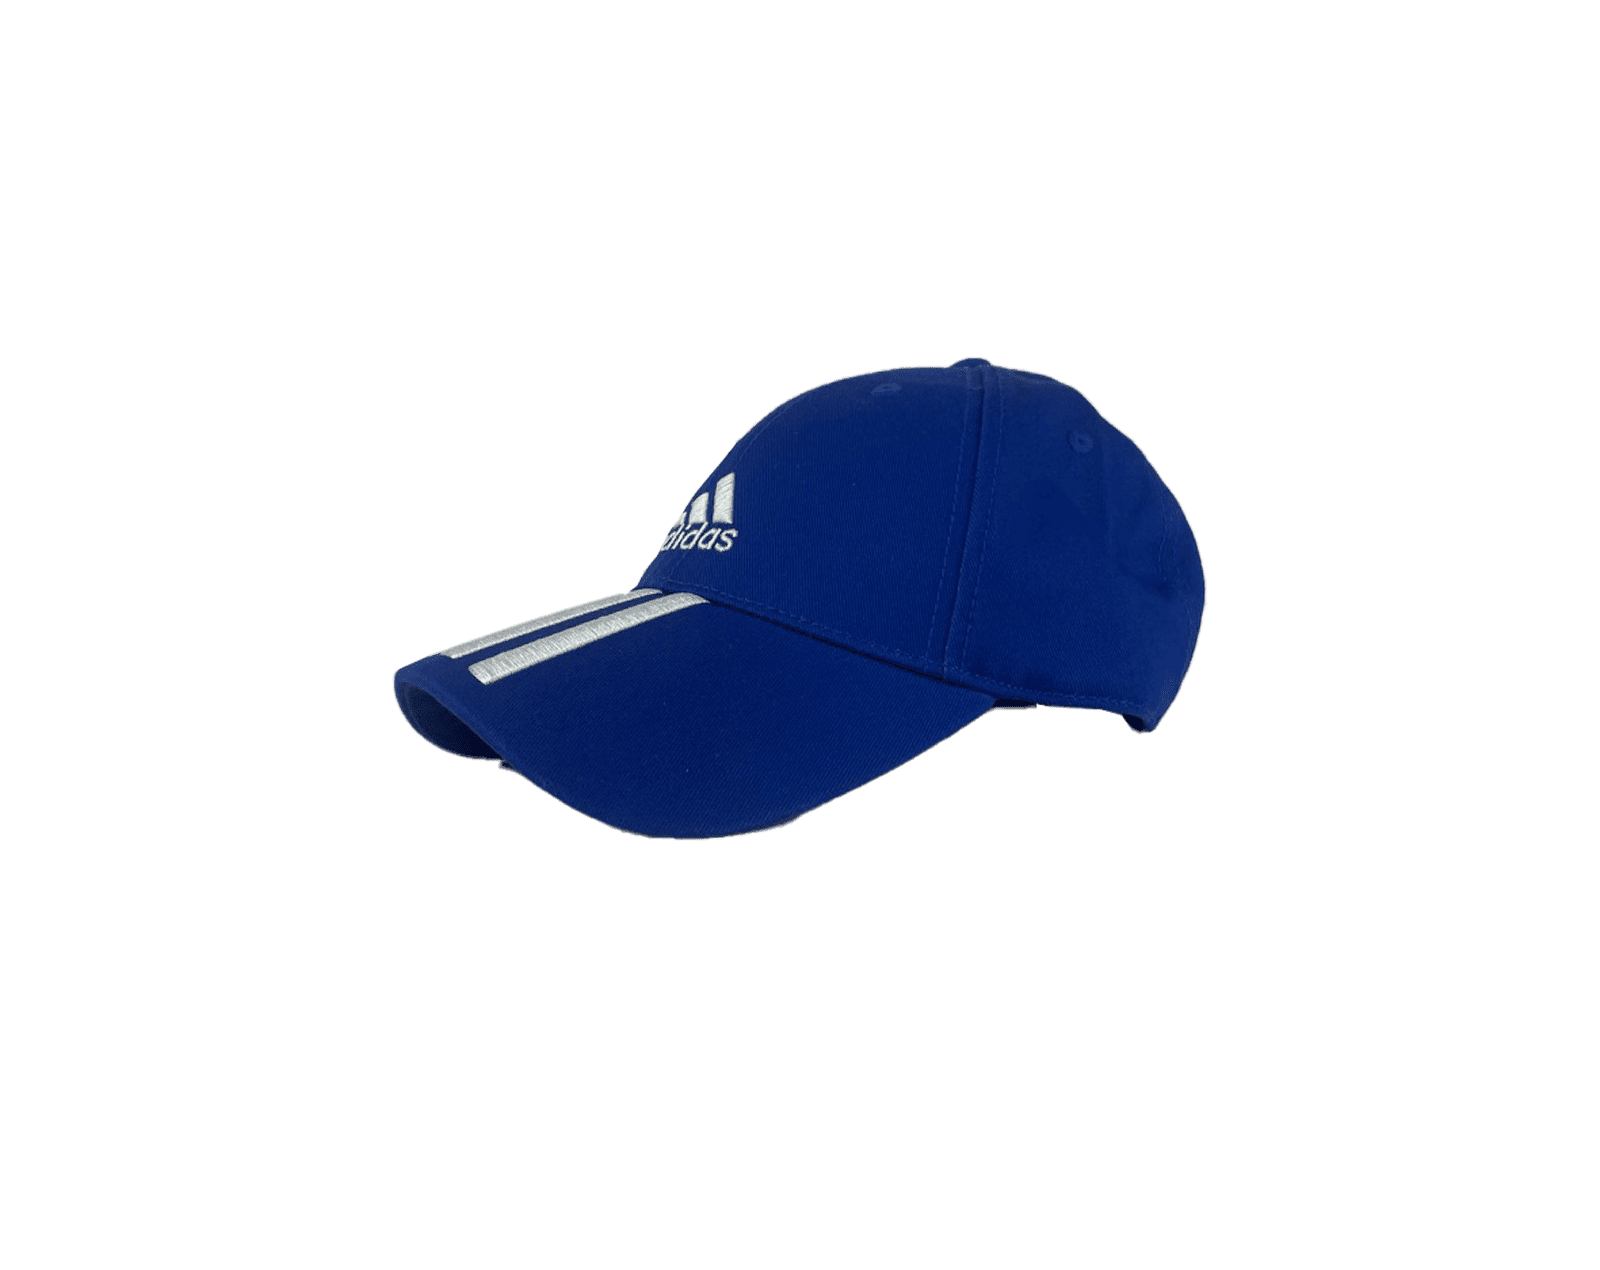 A blue Adidas cap